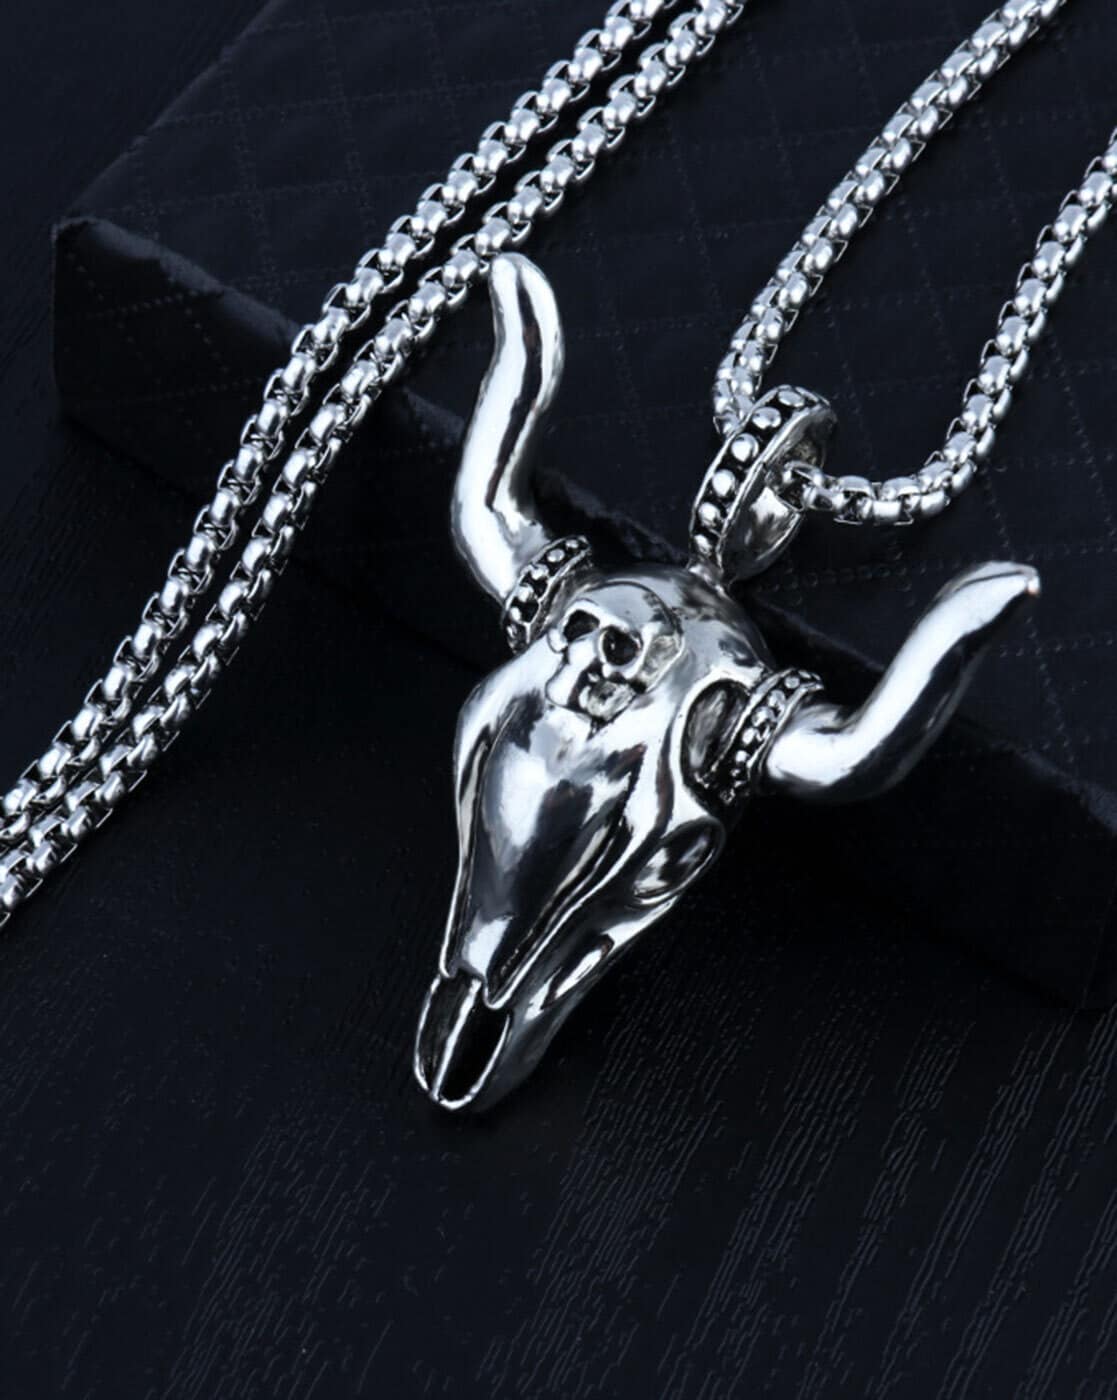 Buy Bull Skull Necklace Online in India - Etsy